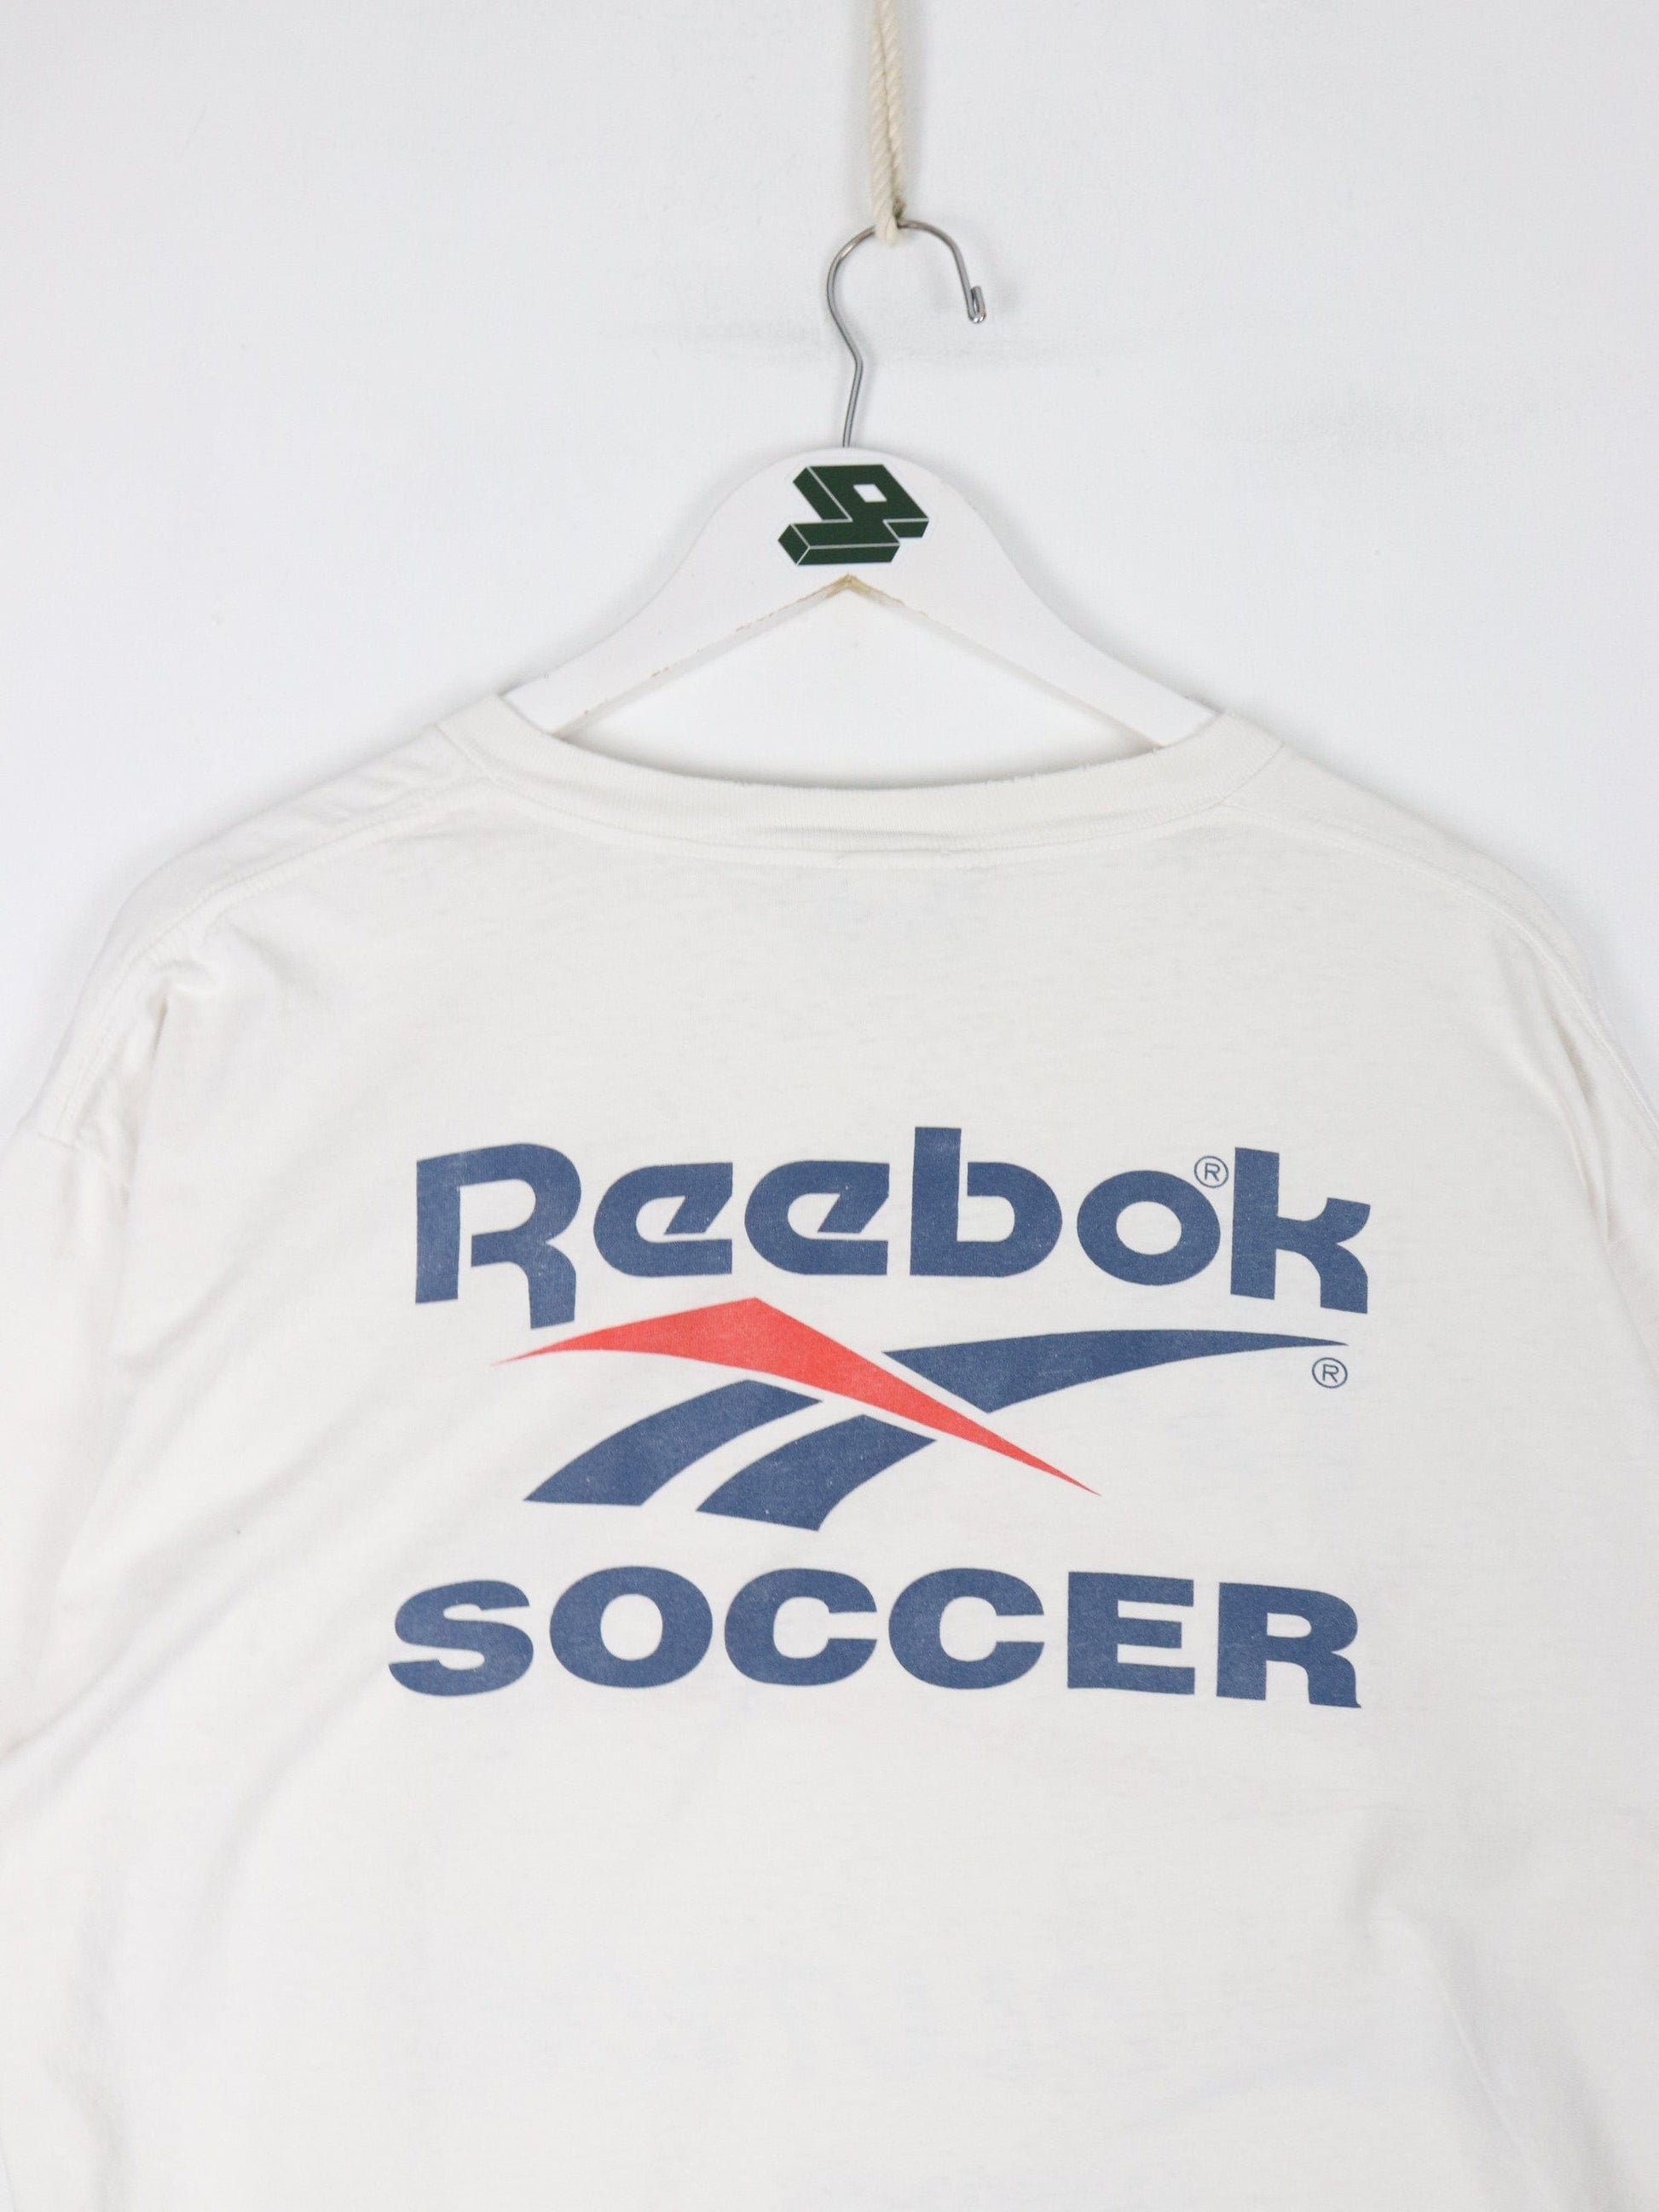 Reebok T-Shirts & Tank Tops Vintage New England Patriots T Shirt Mens XL White 90s Reebok Soccer MLS